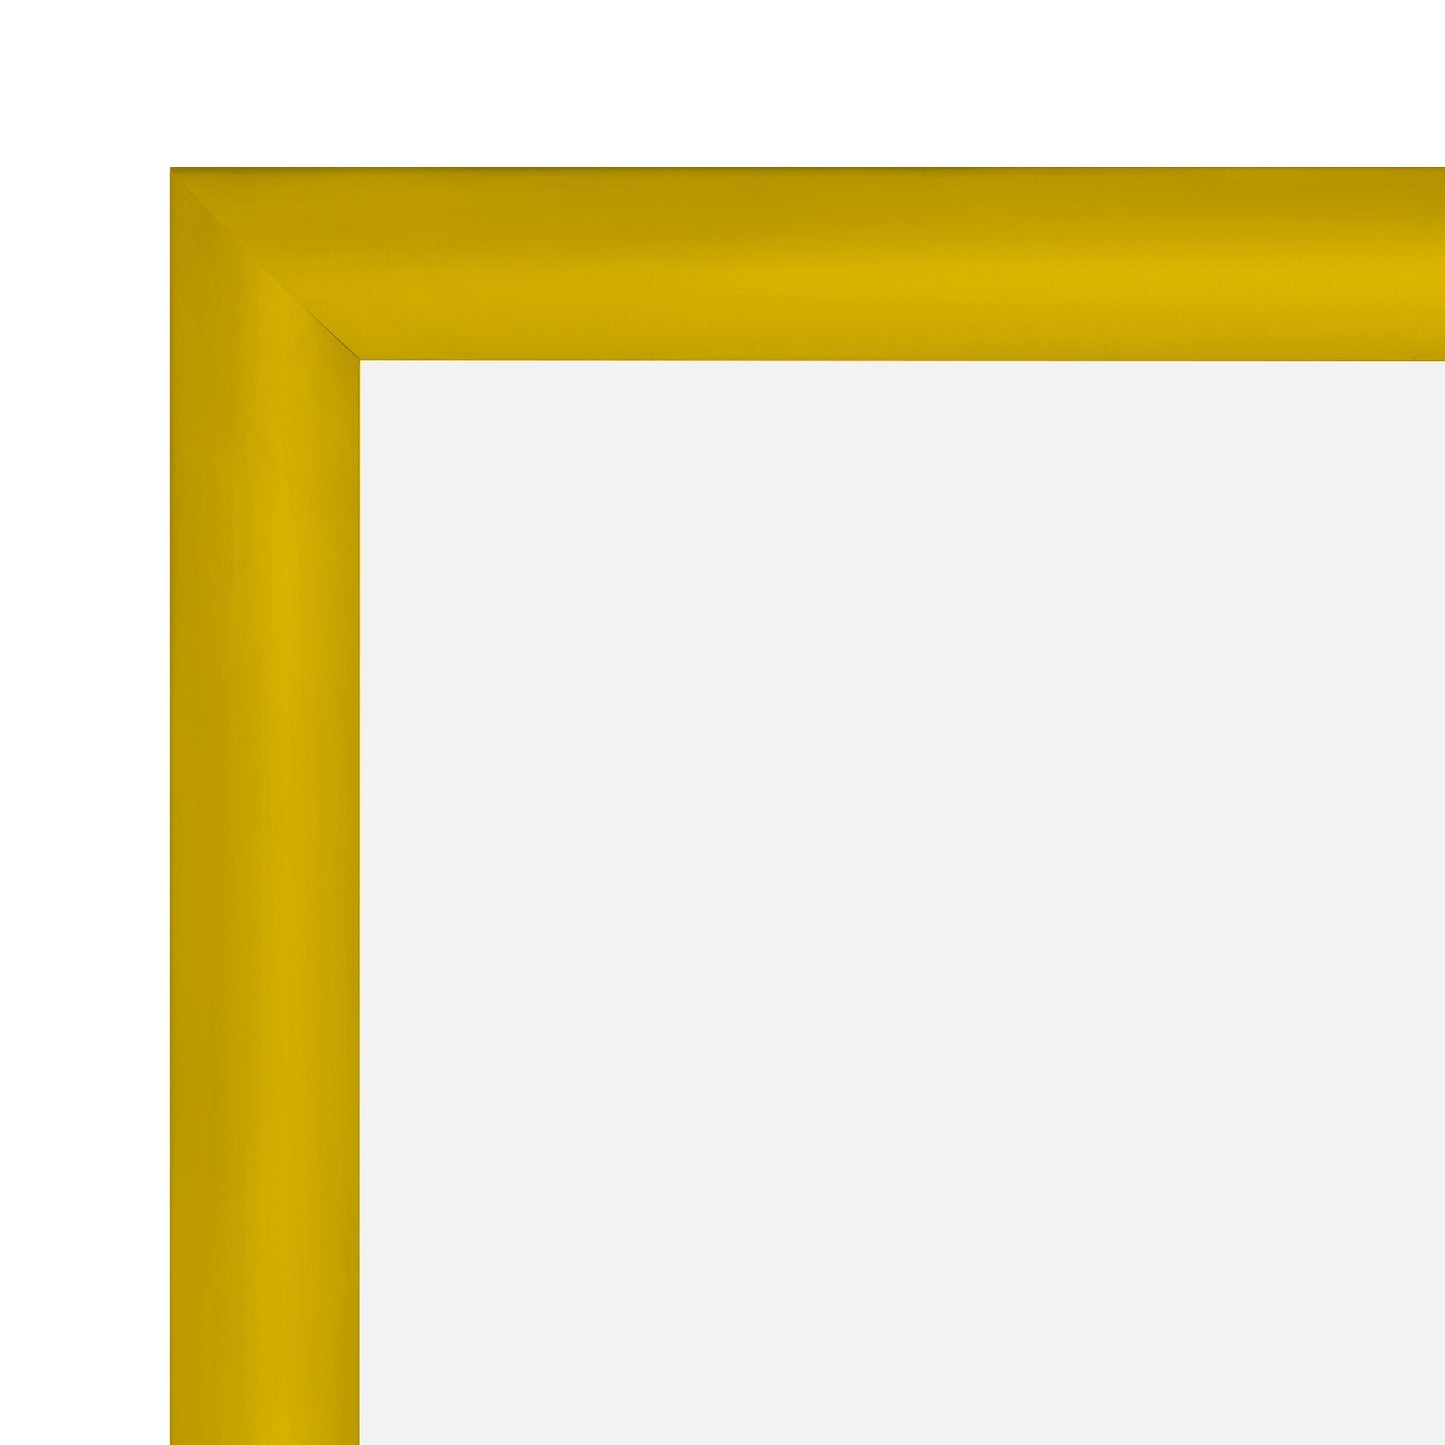 27x40 Yellow SnapeZo® Snap Frame - 1.2" Profile - Snap Frames Direct